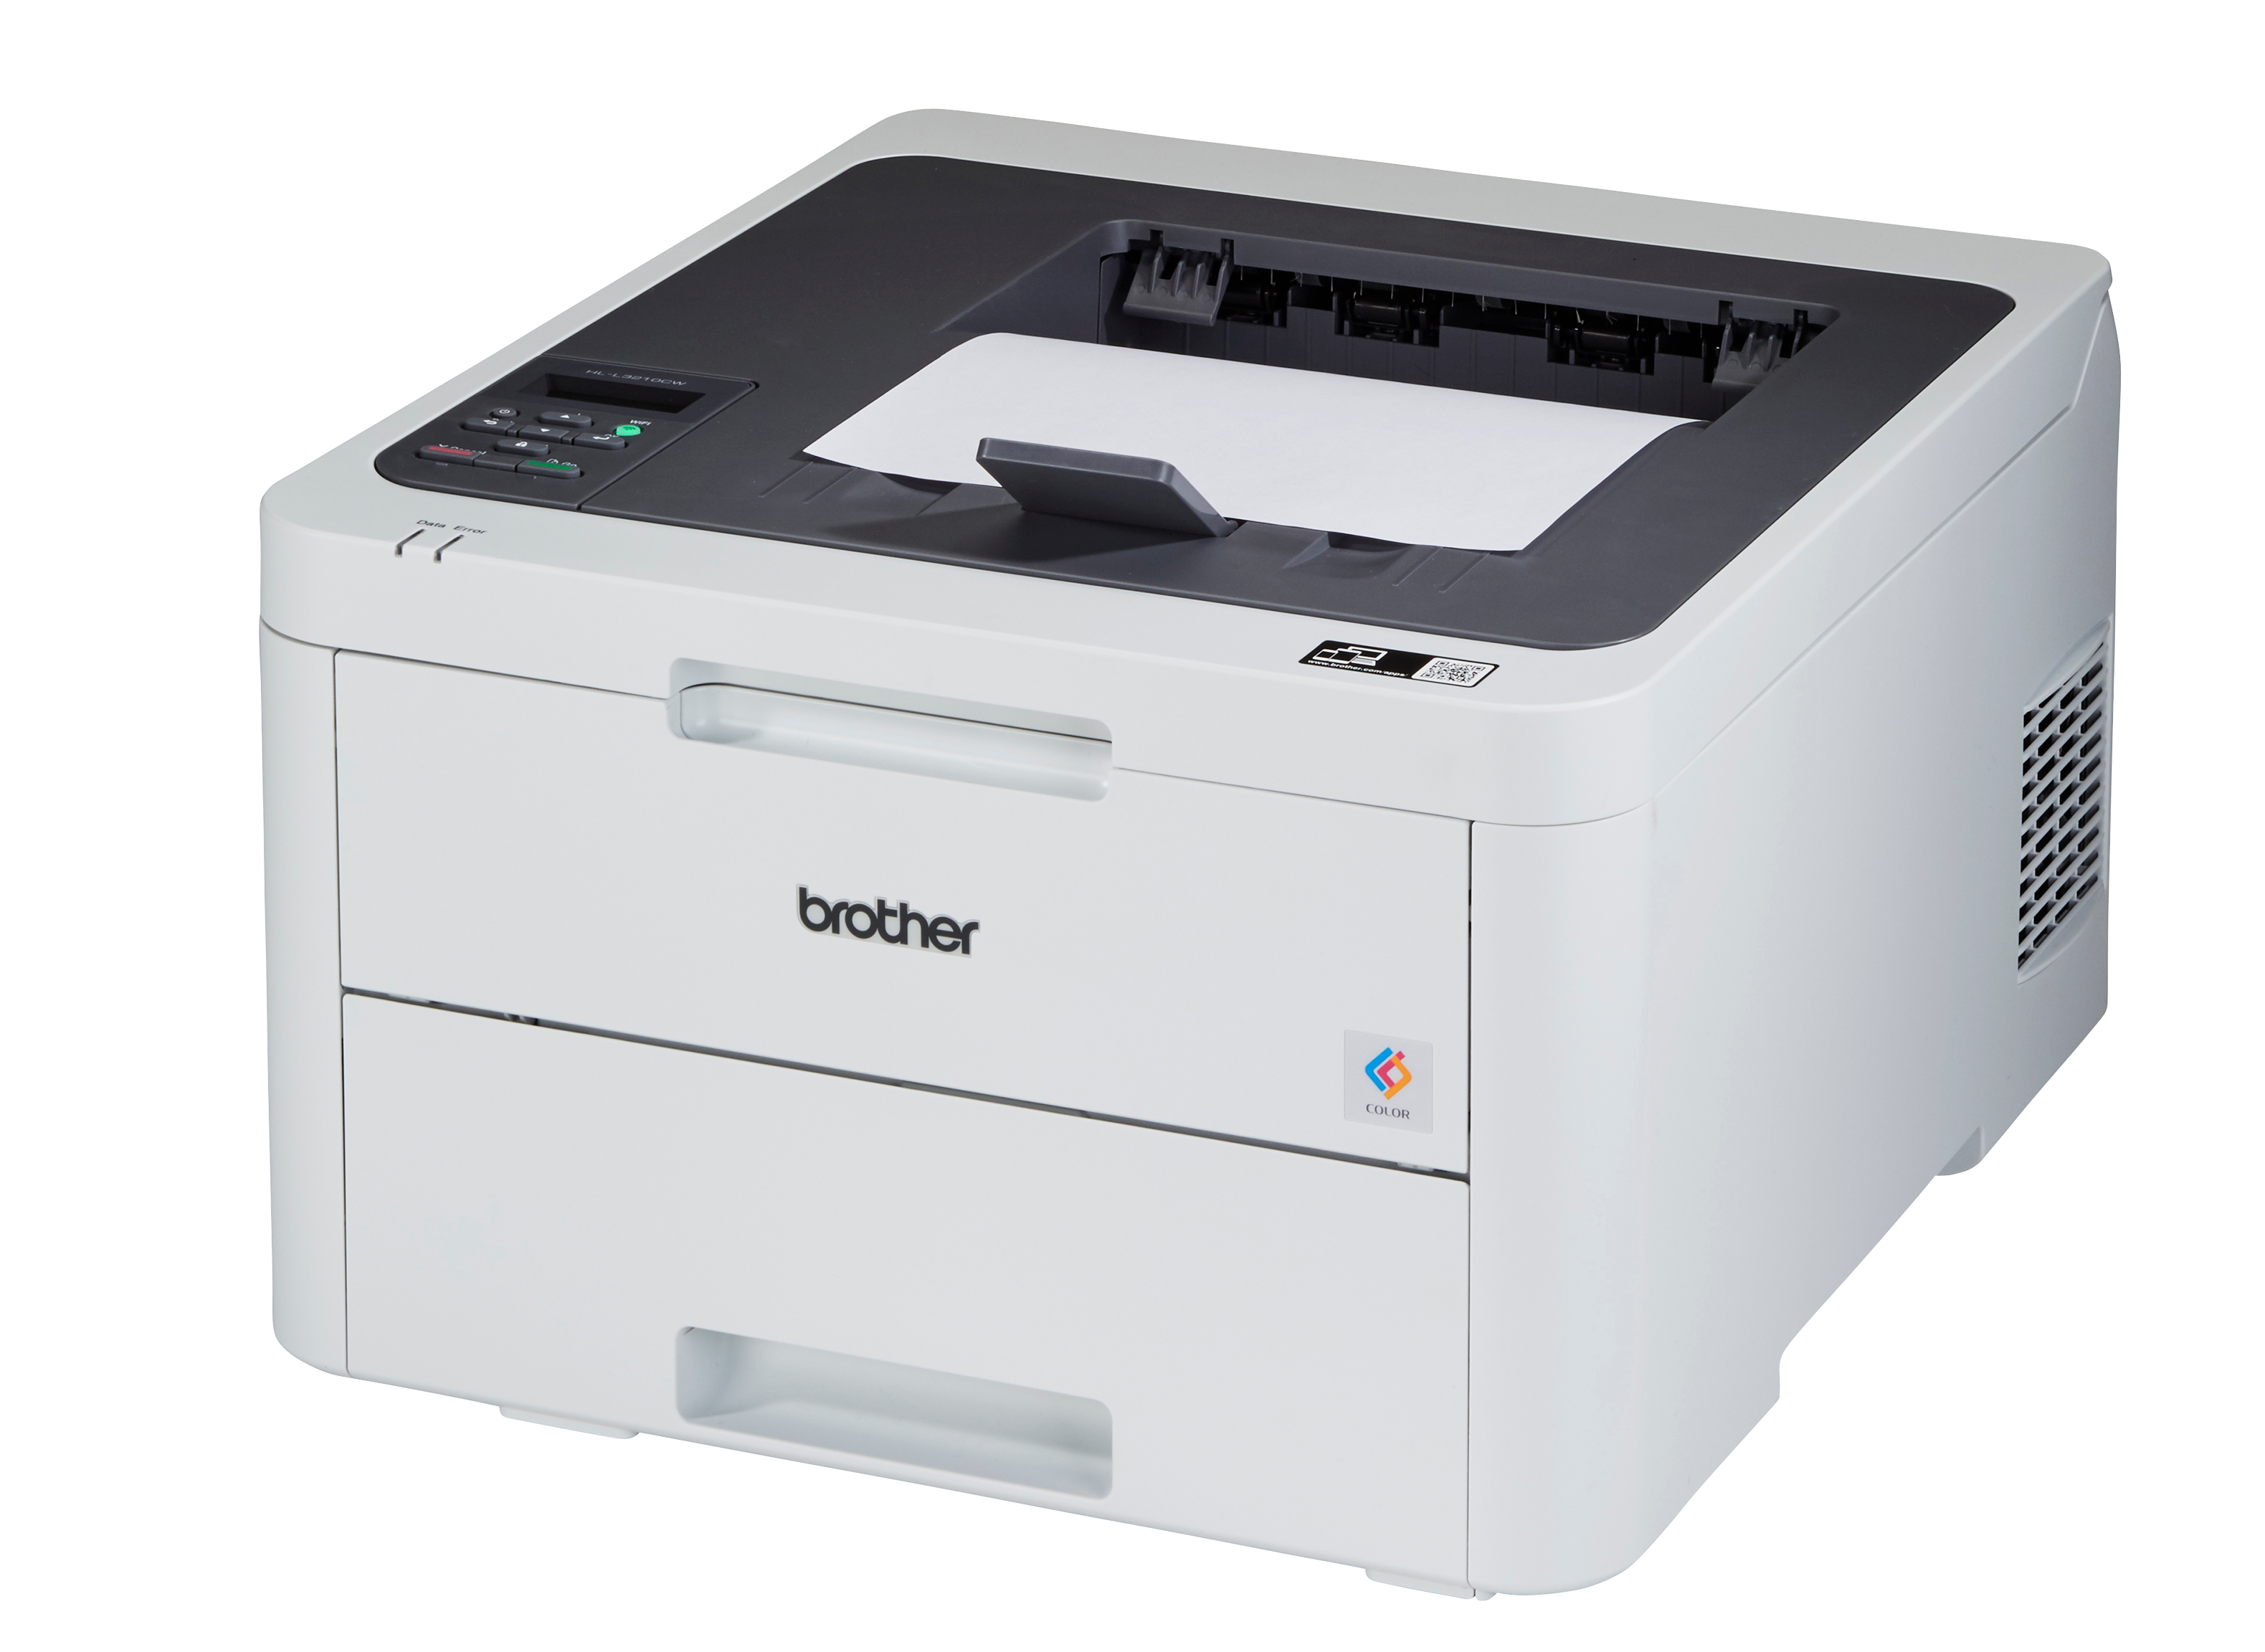 HL-L3210CW Printer Review - Reports